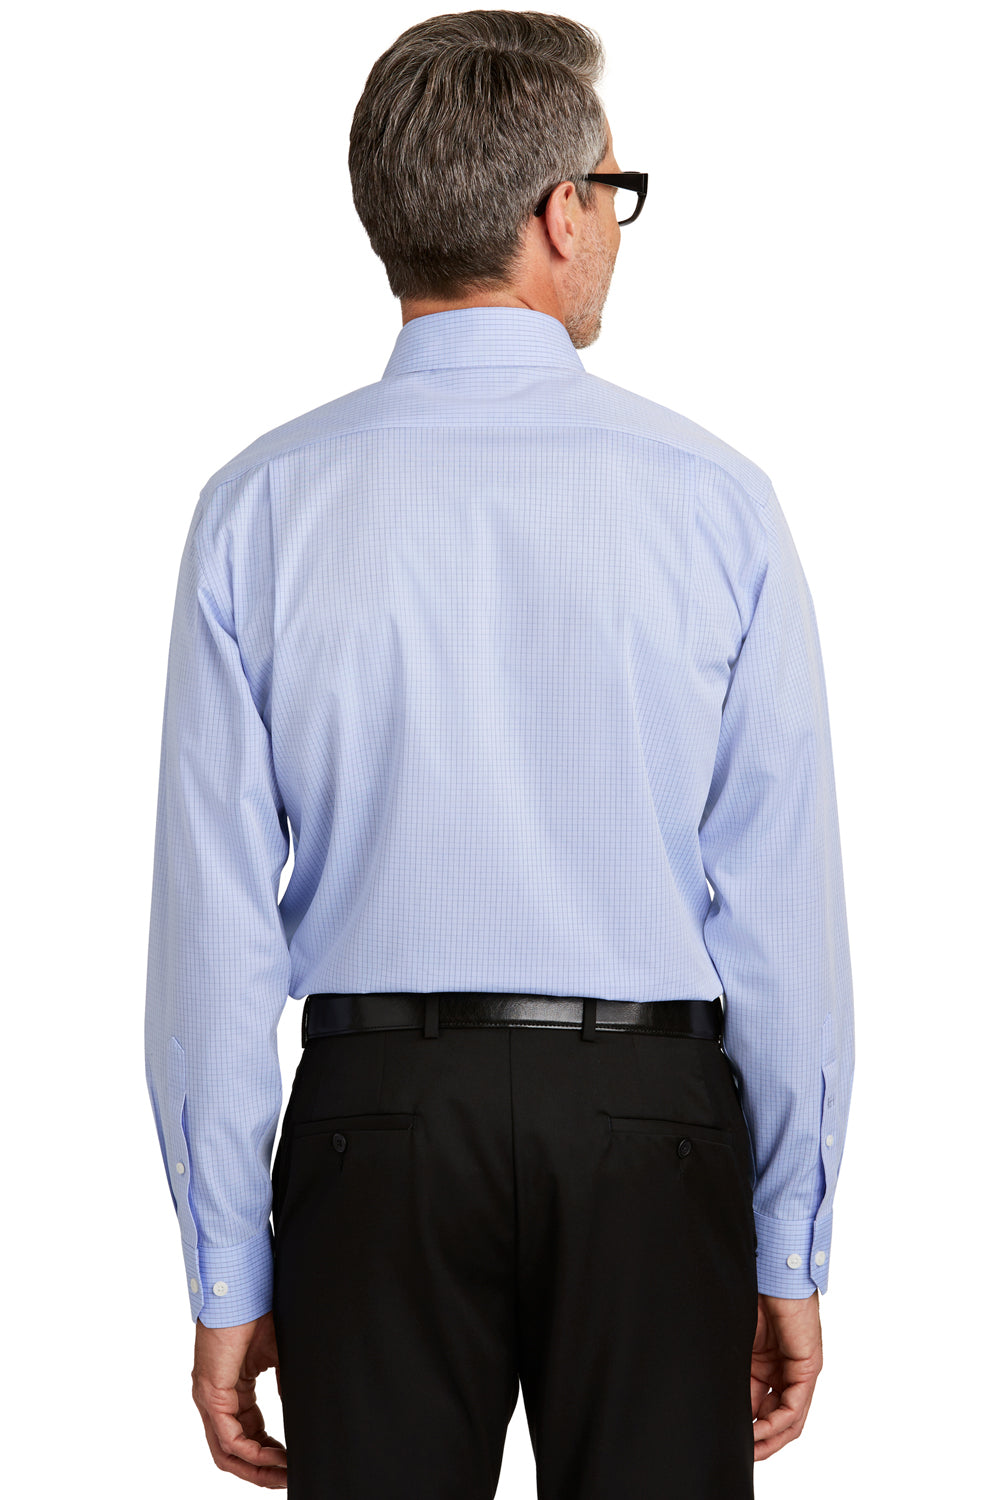 Red House RH81 Mens Wrinkle Resistant Long Sleeve Button Down Shirt Light Blue Back